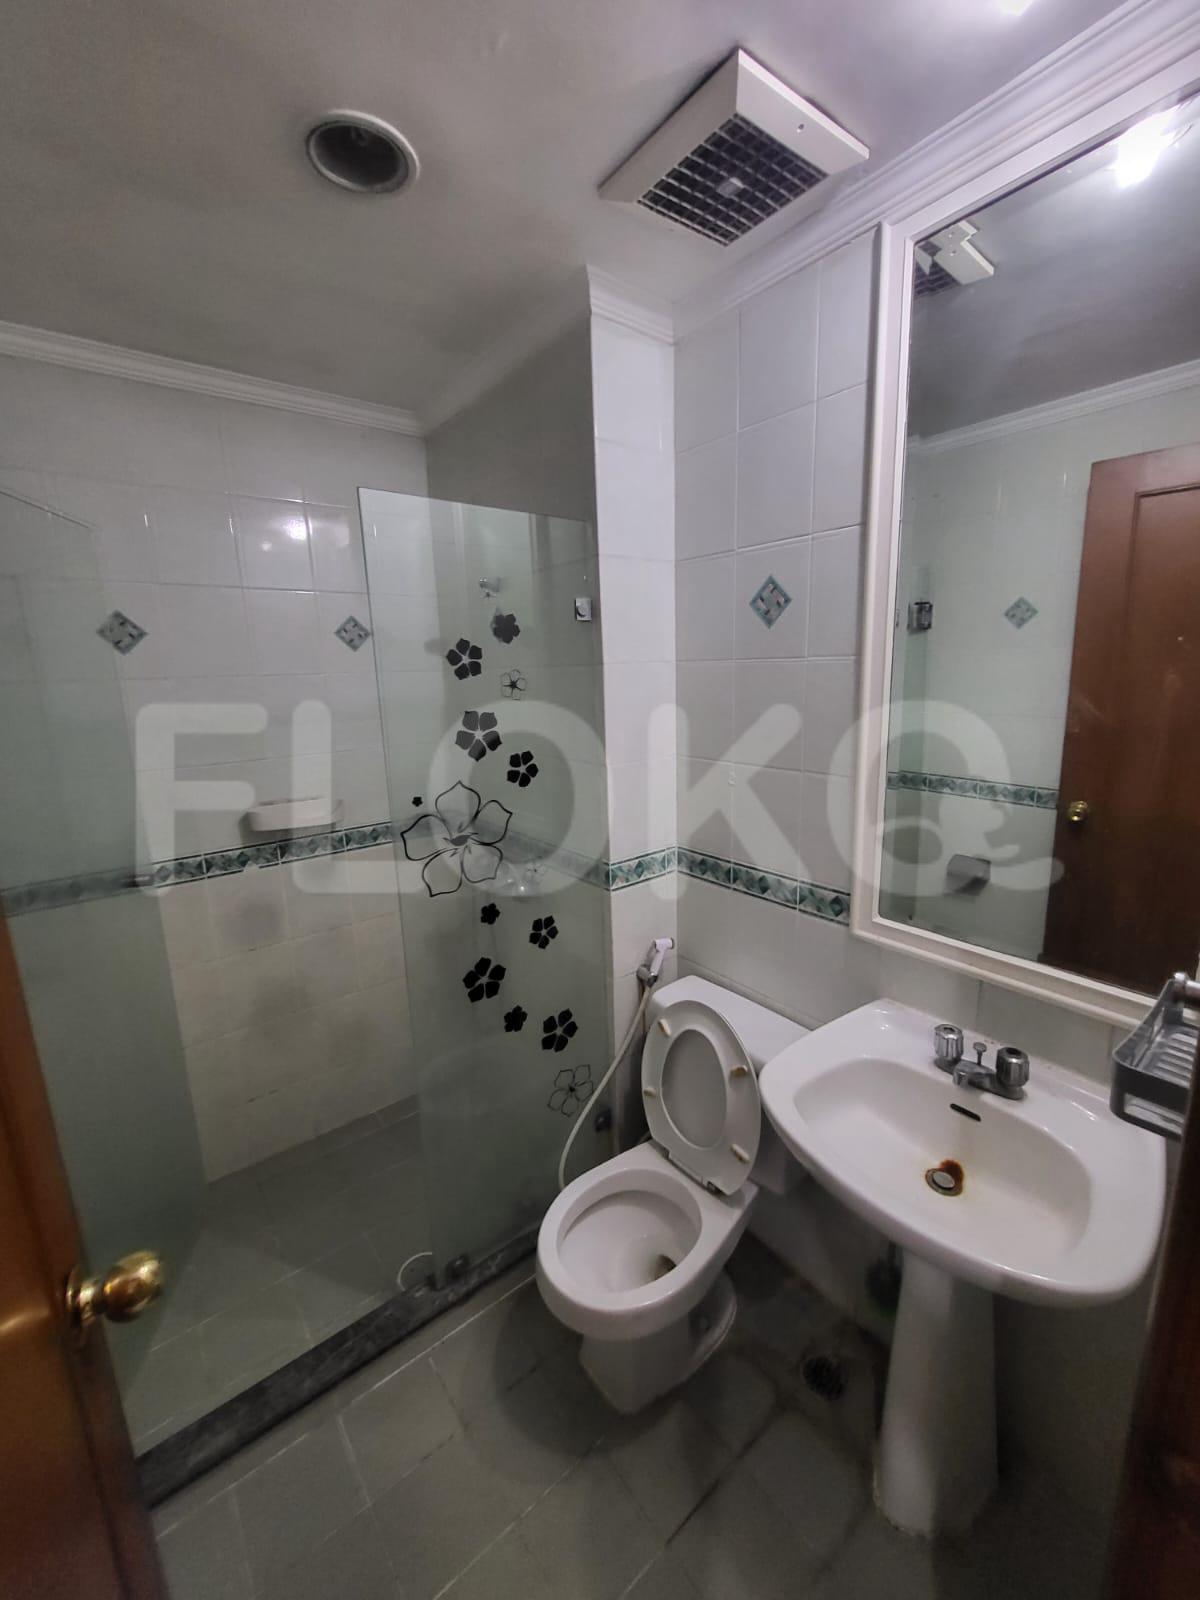 3 Bedroom on 8th Floor fku265 for Rent in Puri Imperium Apartment